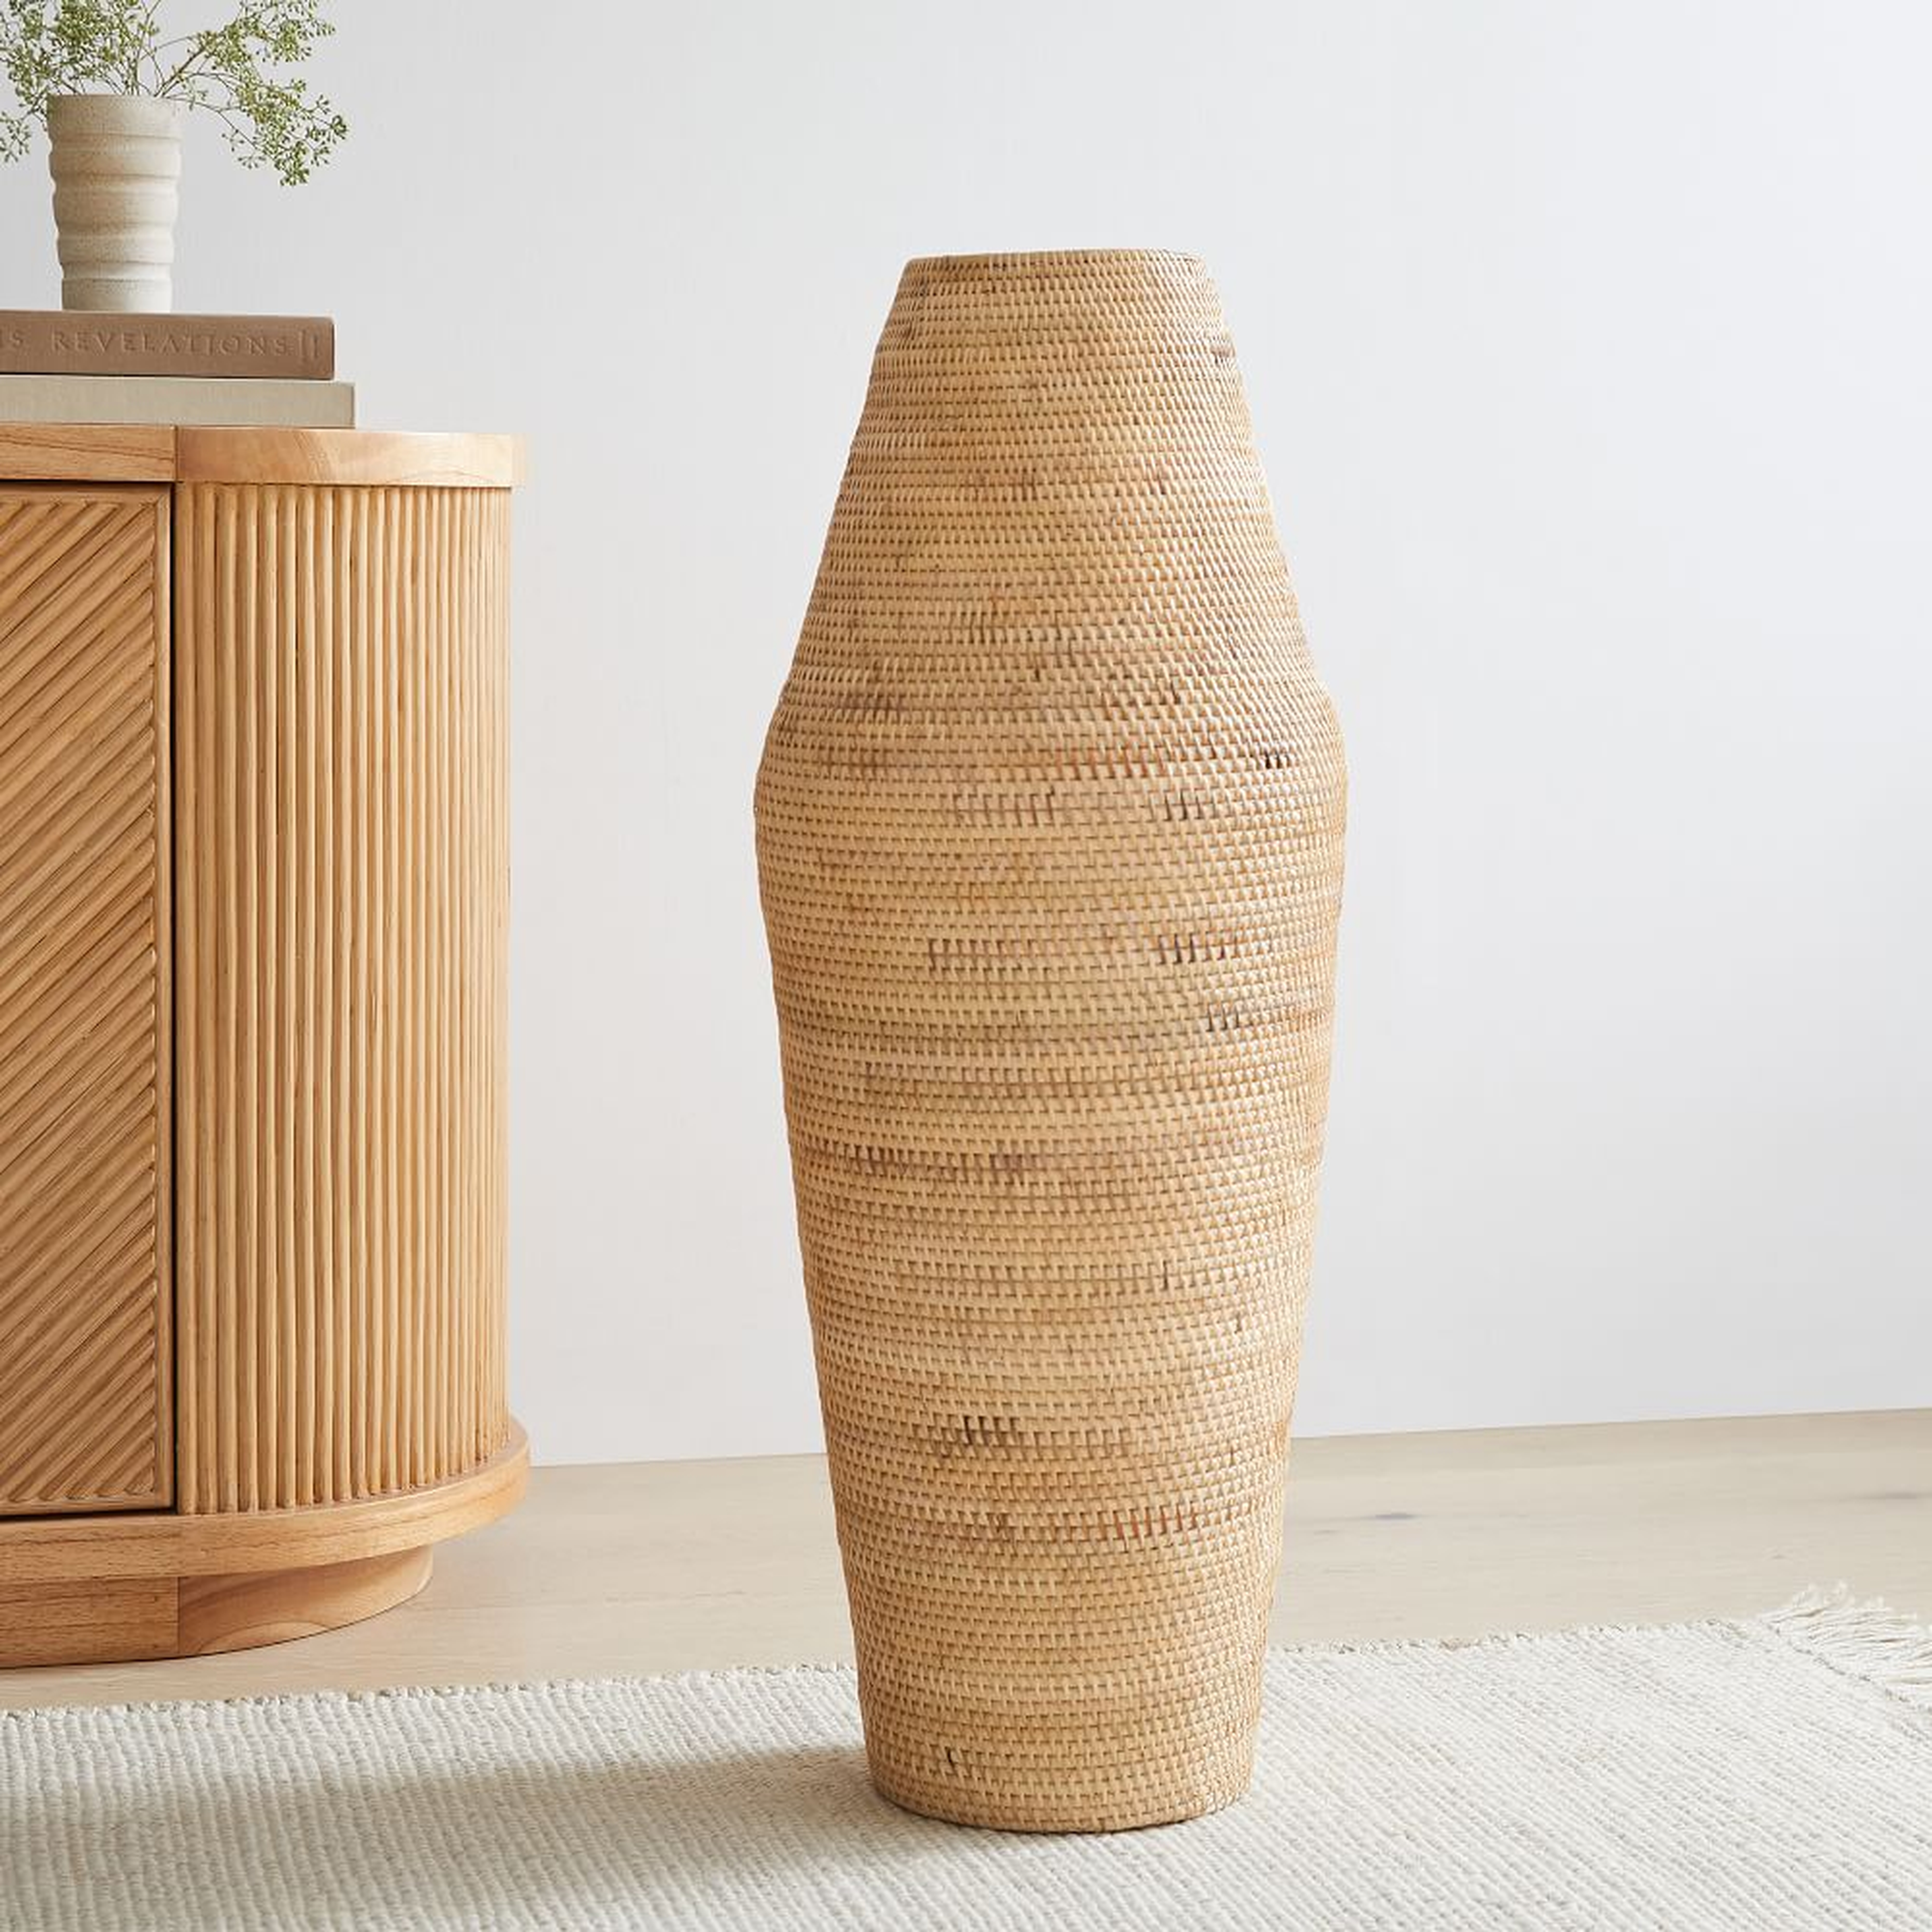 Merida Floor Vases, Tall Vase, Natural, Rattan, 32 Inches - West Elm